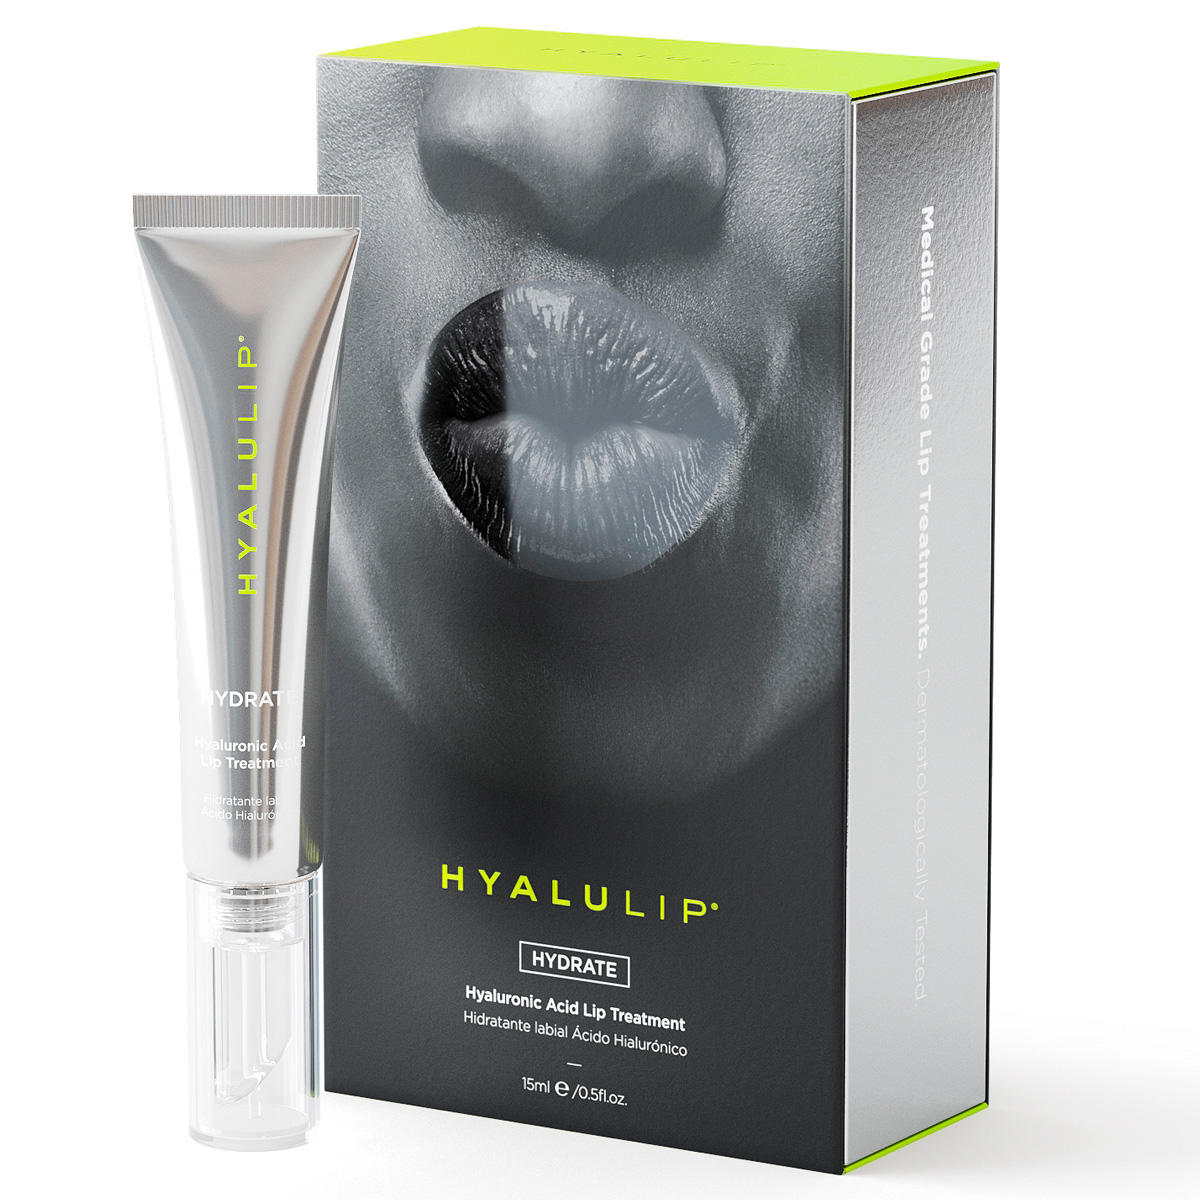 Hyalulip HYDRATE Hyaluronic Acid Lip Treatment 15 ml - 2